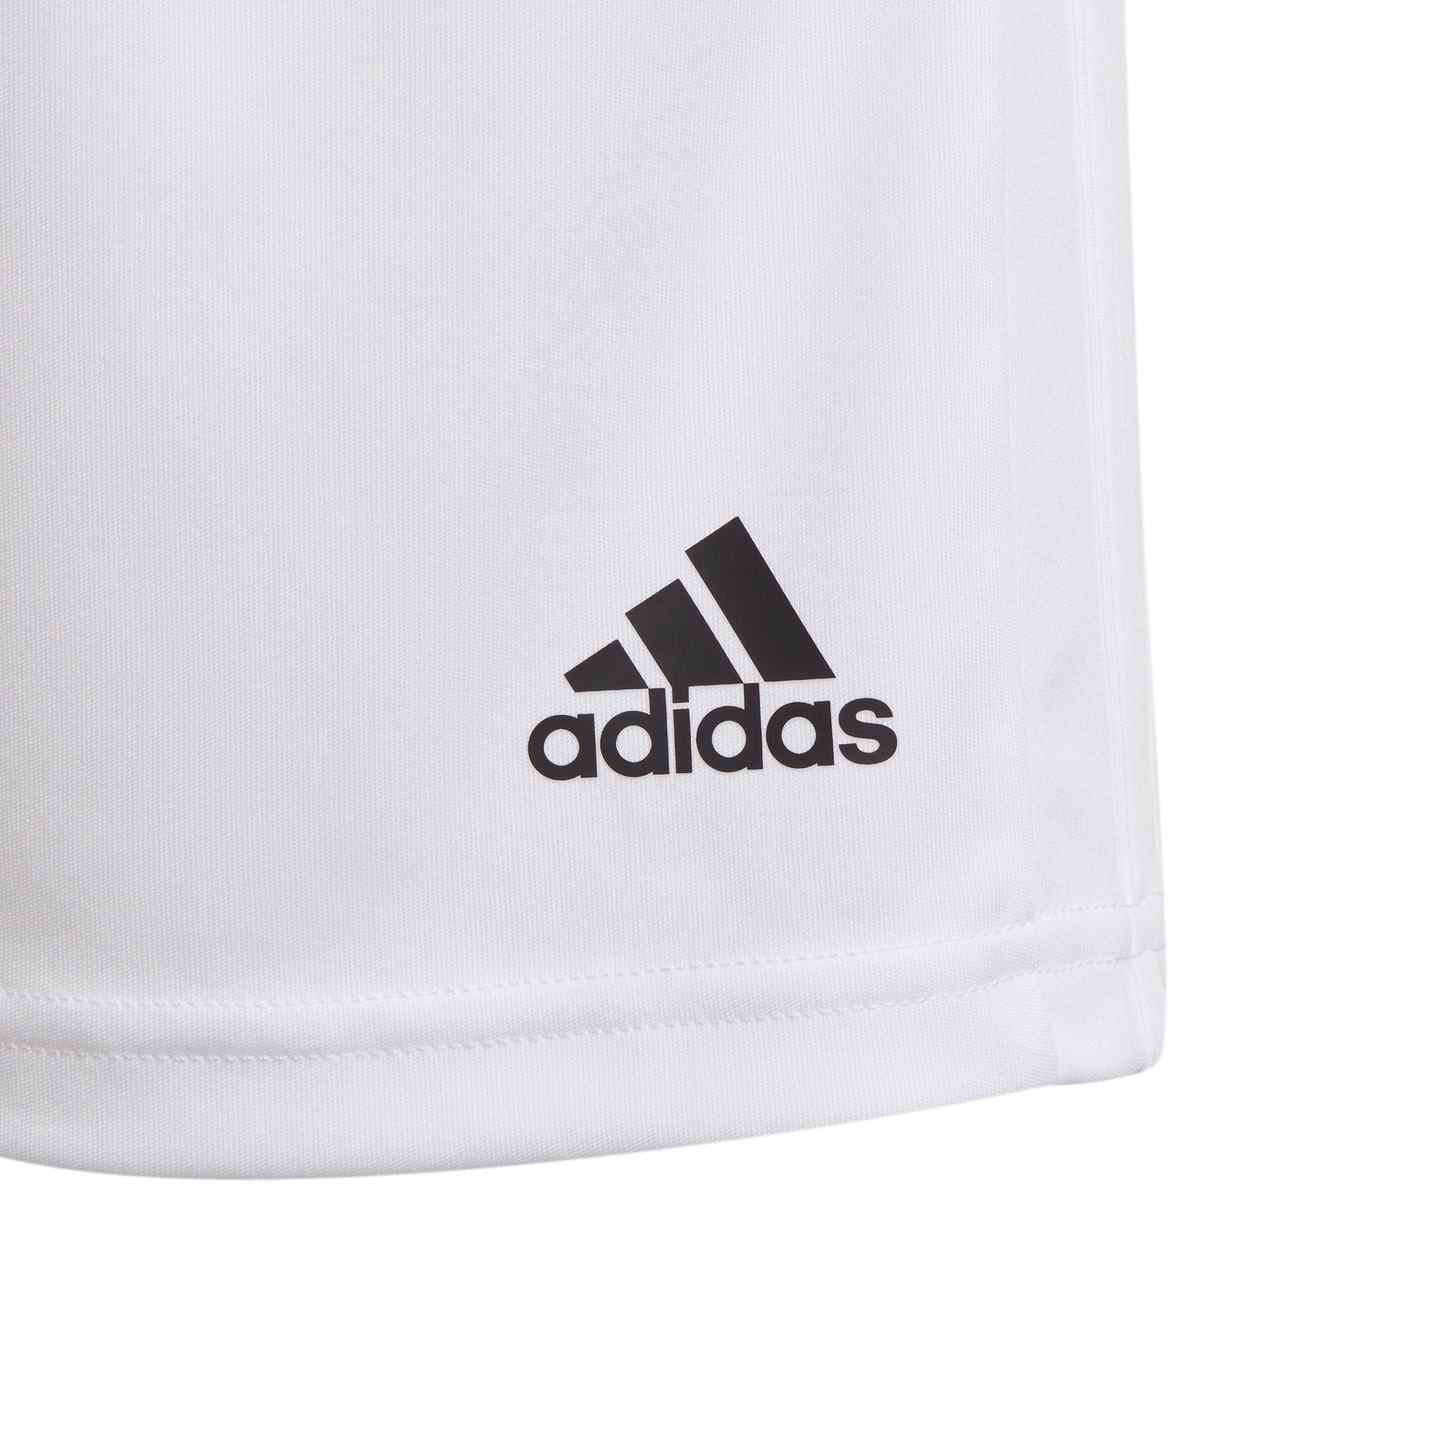 adidas Youth Squadra 21 Soccer Shorts White